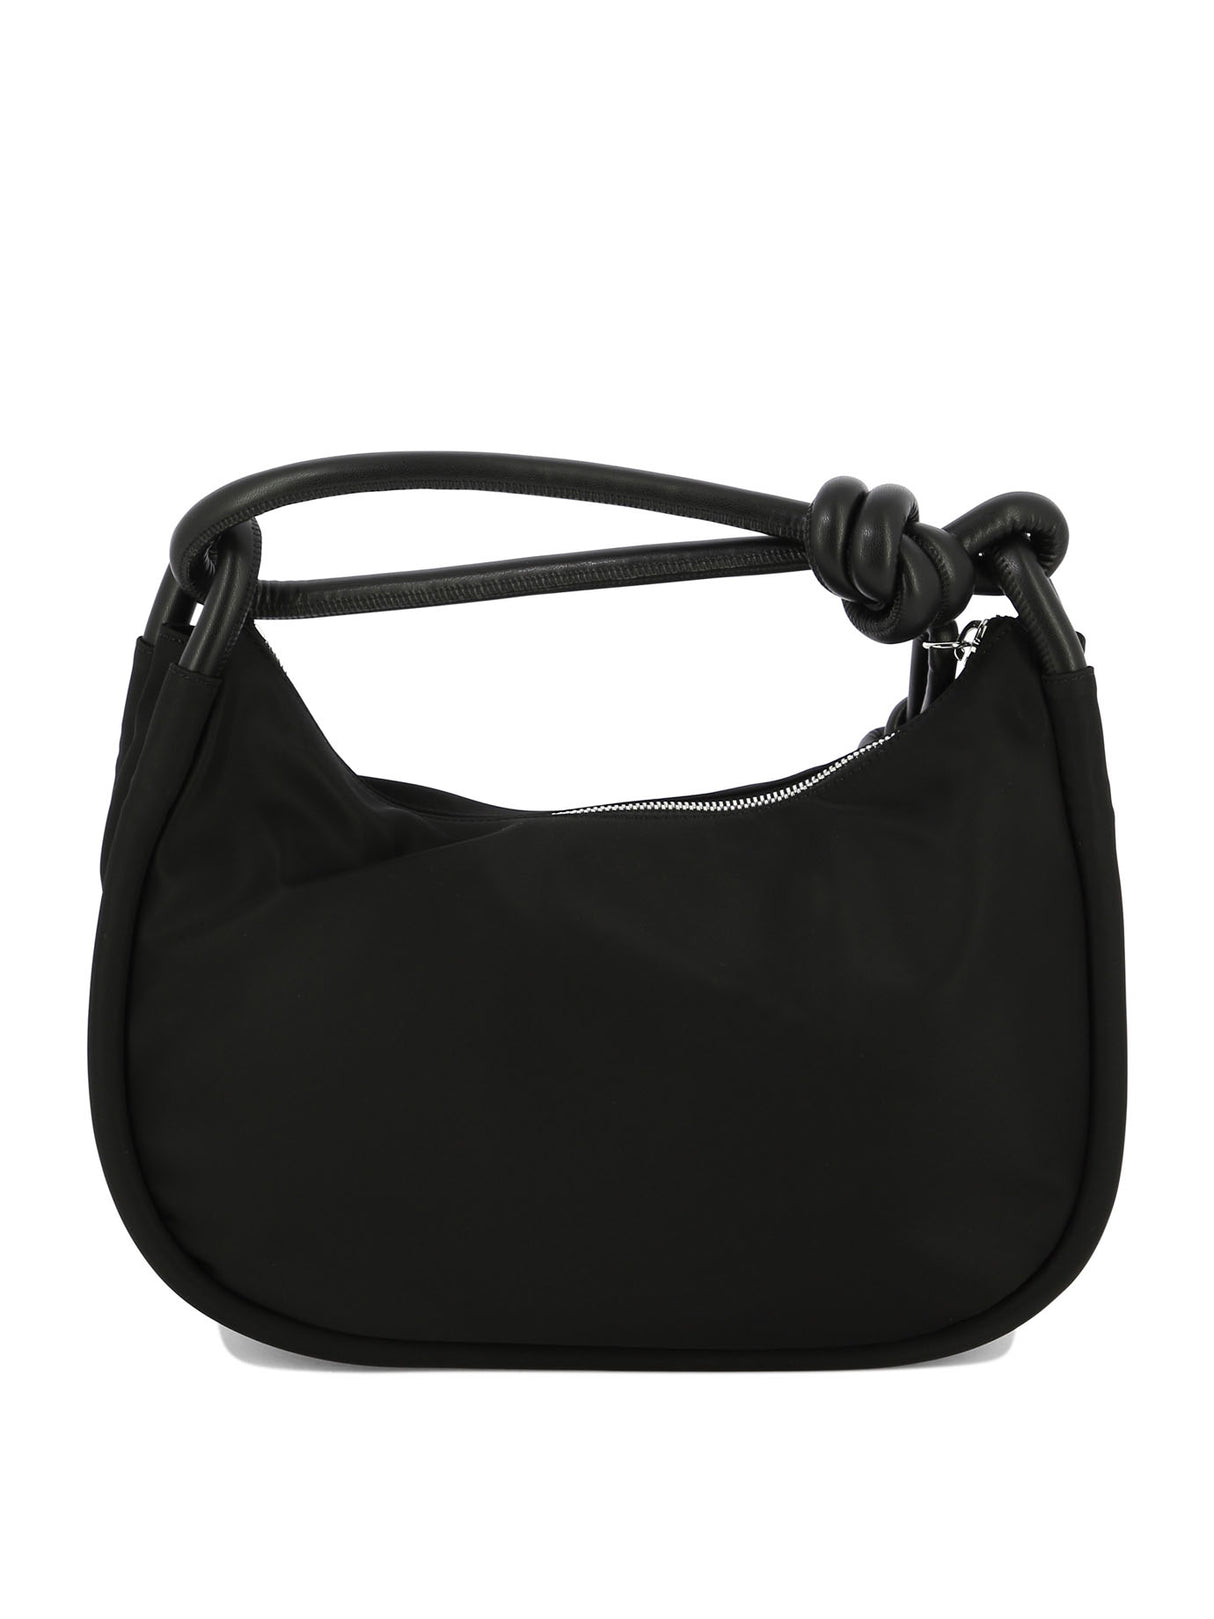 GANNI Modern Black Shoulder Bag for Women - 100% Recycled Nylon